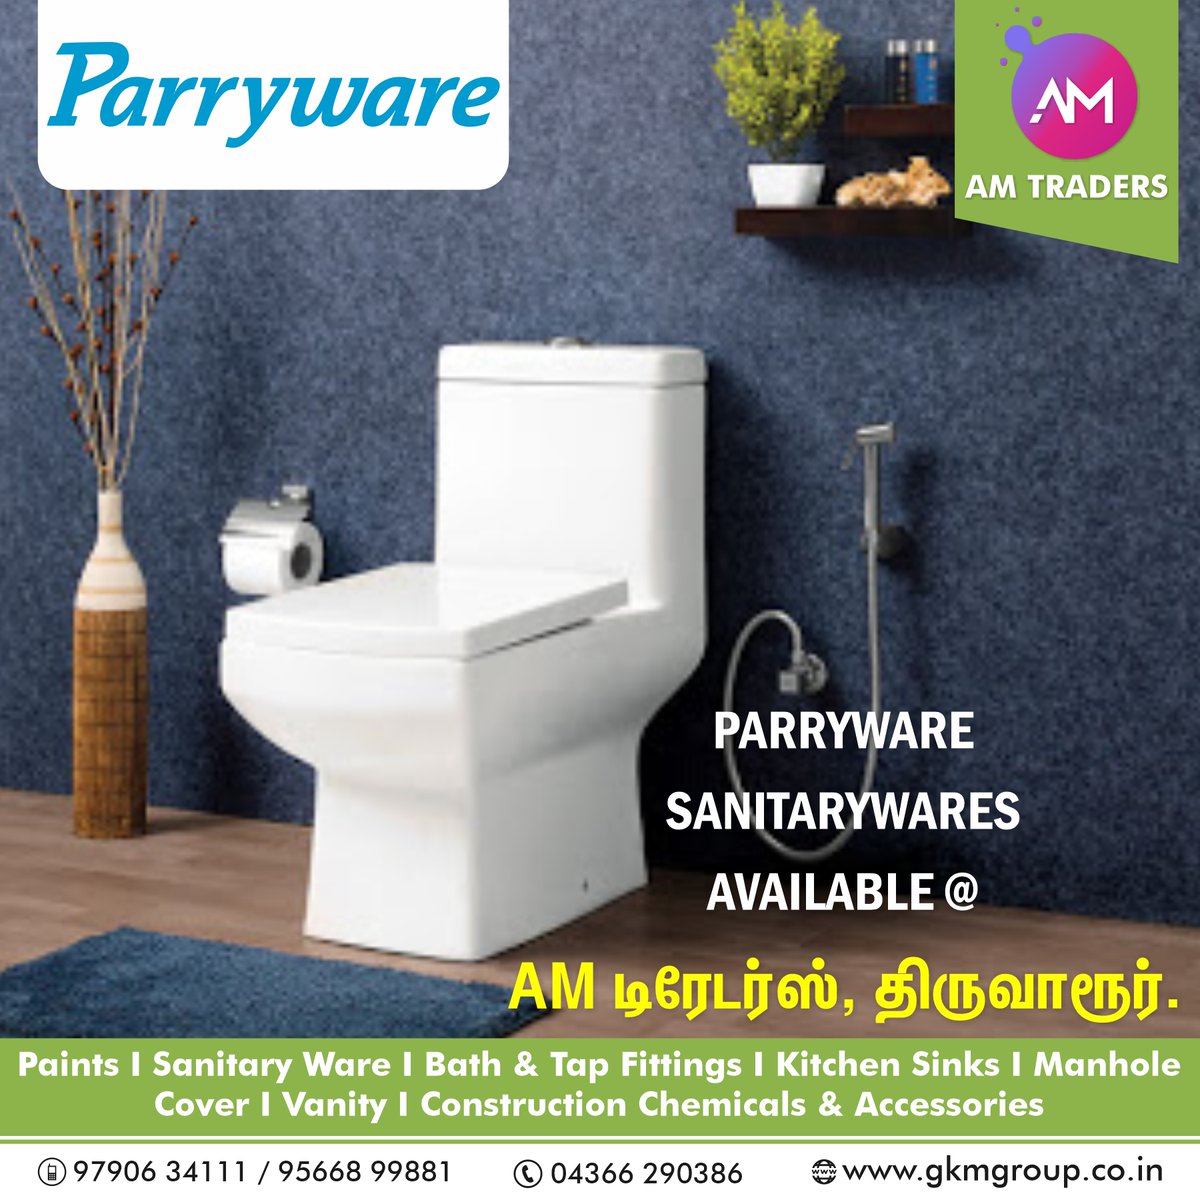 Most leading brand Parryware sanitarywares now available at AM TRADERS, THIRUVARUR.

#parryware #leadingbrands #sanitarywares #singlesuite #onepiece #EWC #orissapan #asianpan #ceramics #toilet #amtraders #Thiruvarur